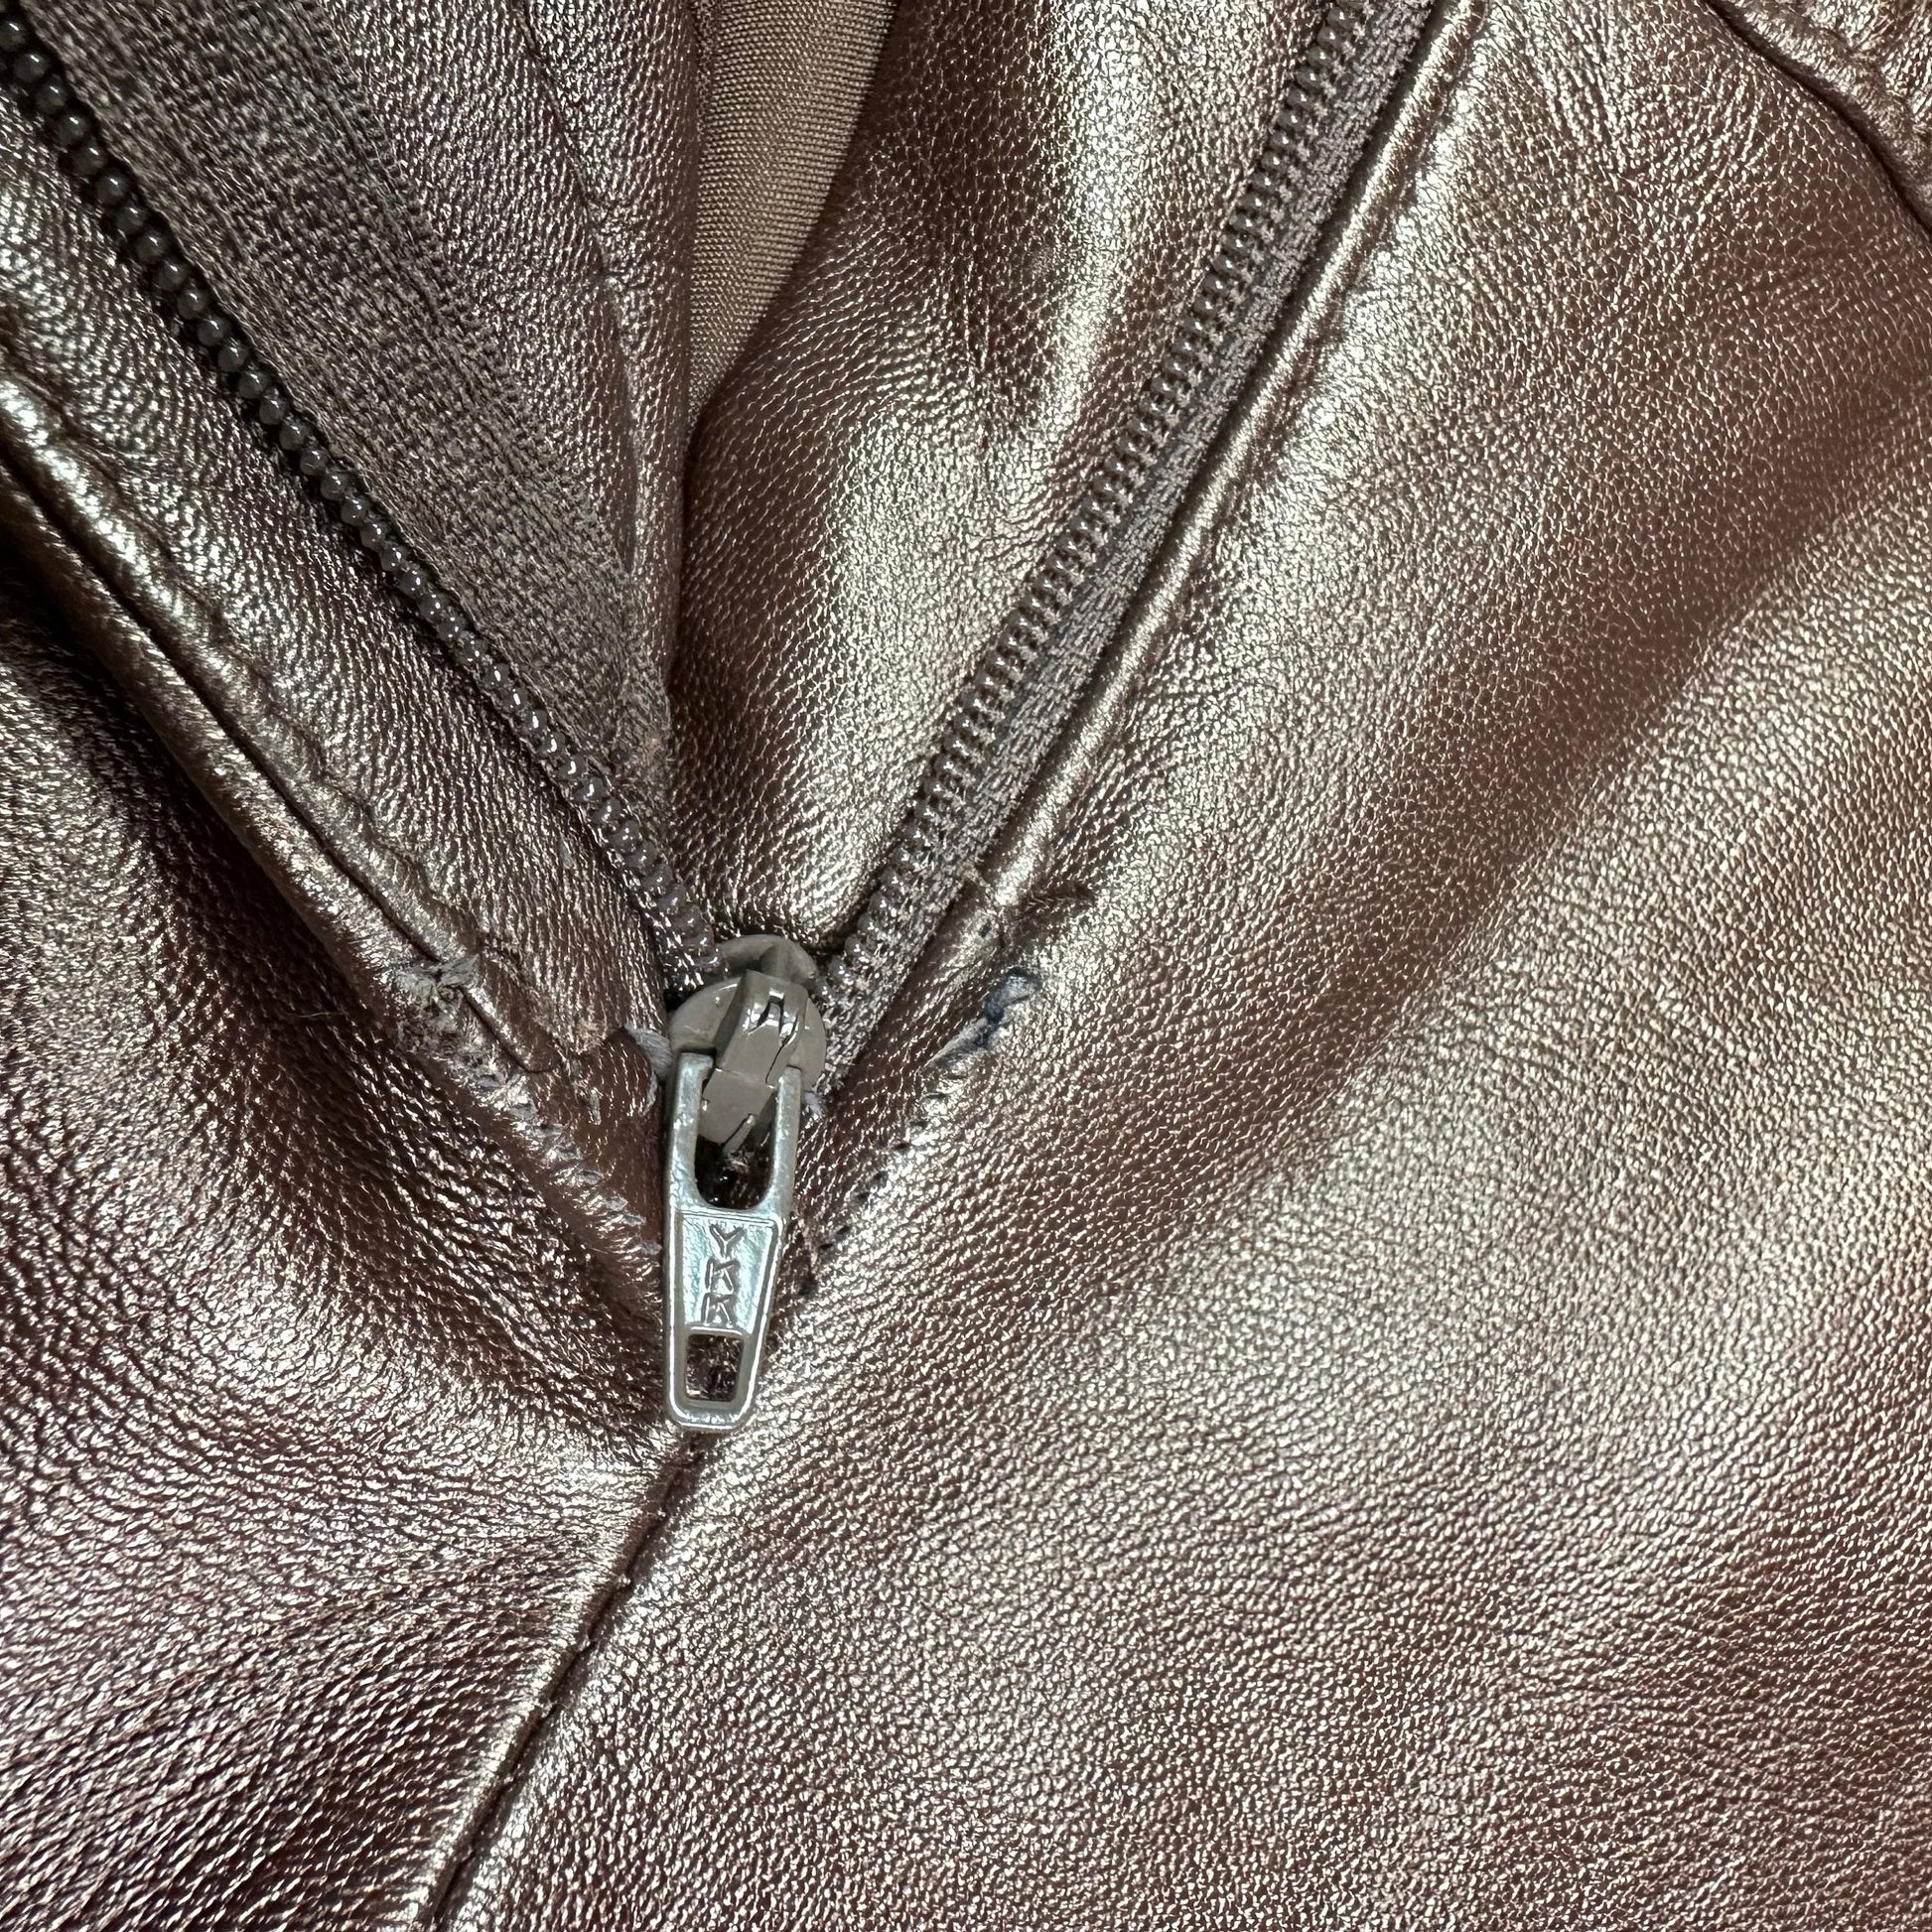 90s Y2K Cache Low Rise Leather Pants - Medium | Vintage Boho Copper Bootcut Trousers